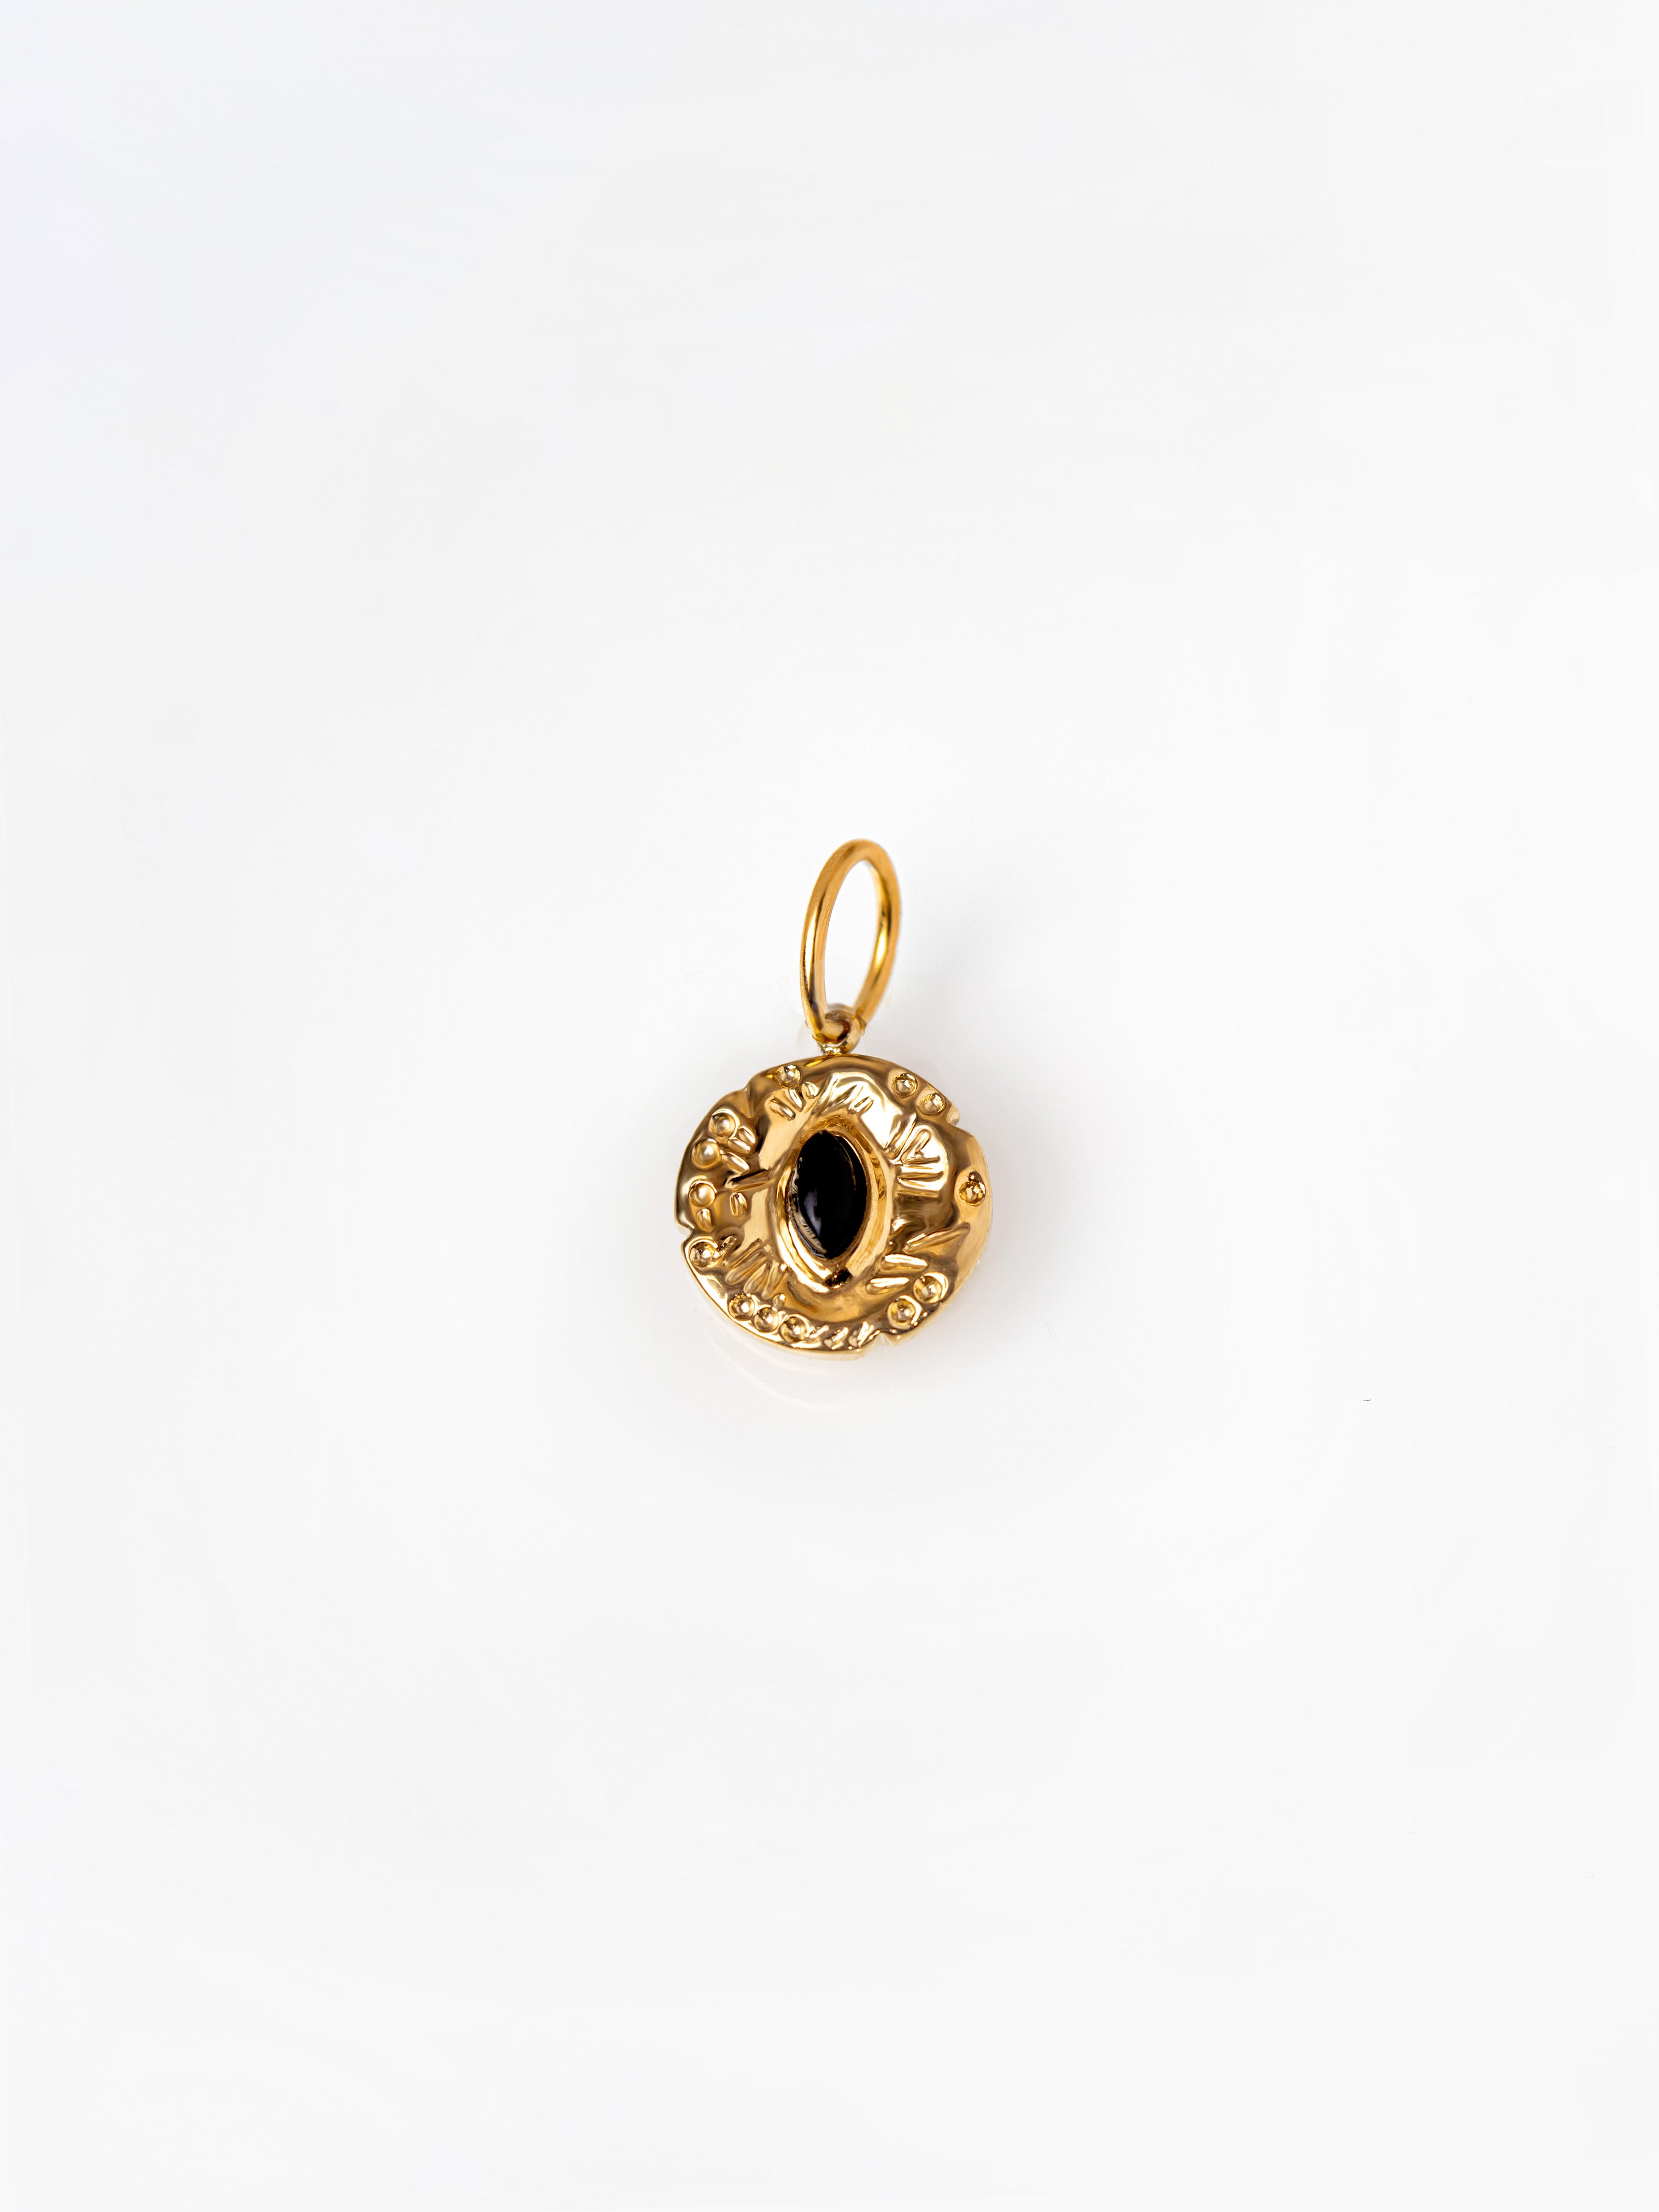 Gold Heirloom Evil Eye Pendant / Charm With Black Stone